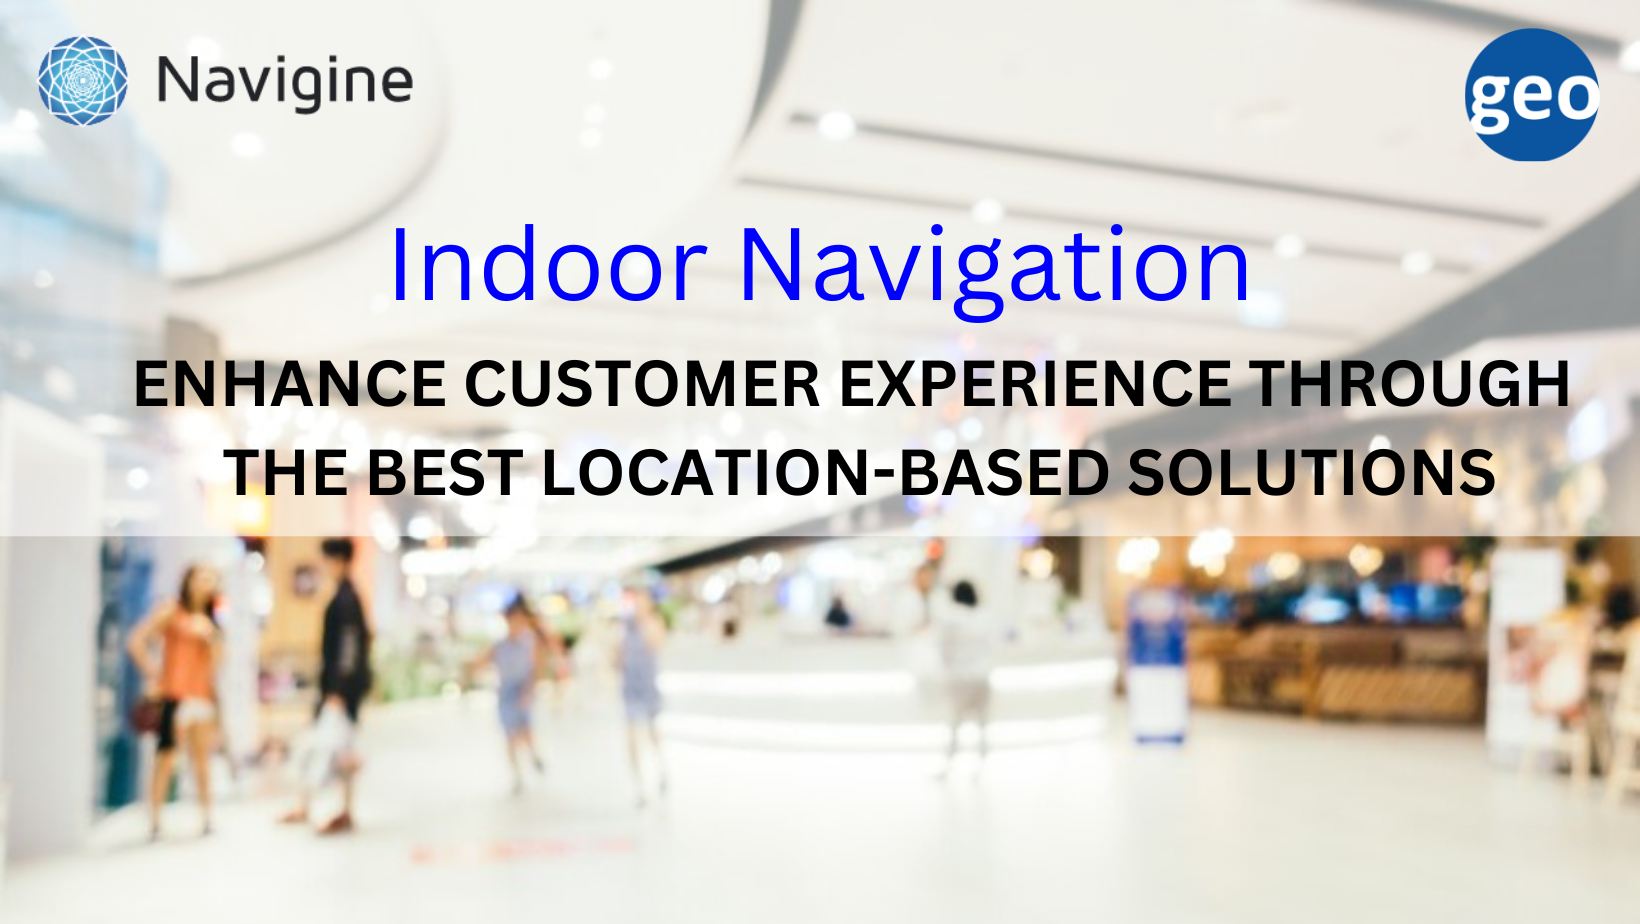 Navigine: Indoor Navigation for Manufacturing, Healthcare, Logistics, Retail, and more.